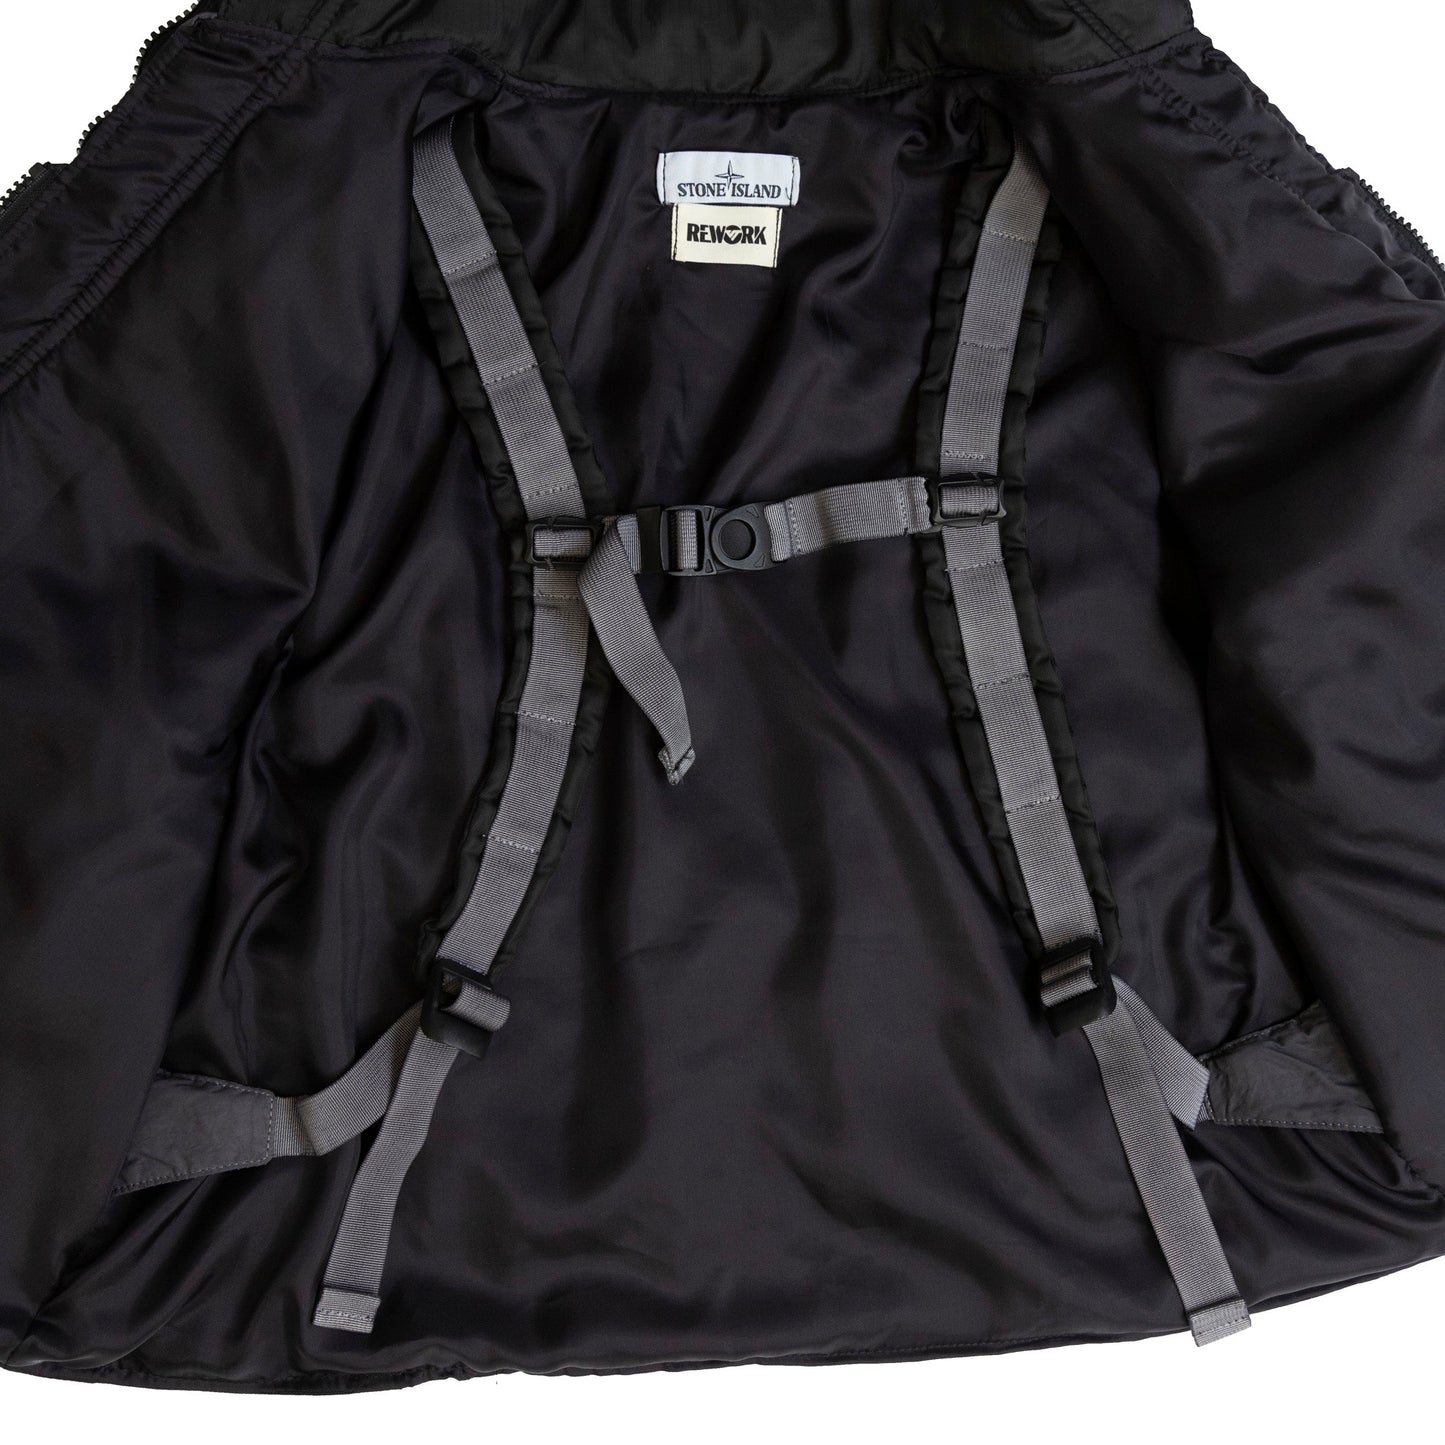 VT Rework : Stone Island Tech Backpack Jacket